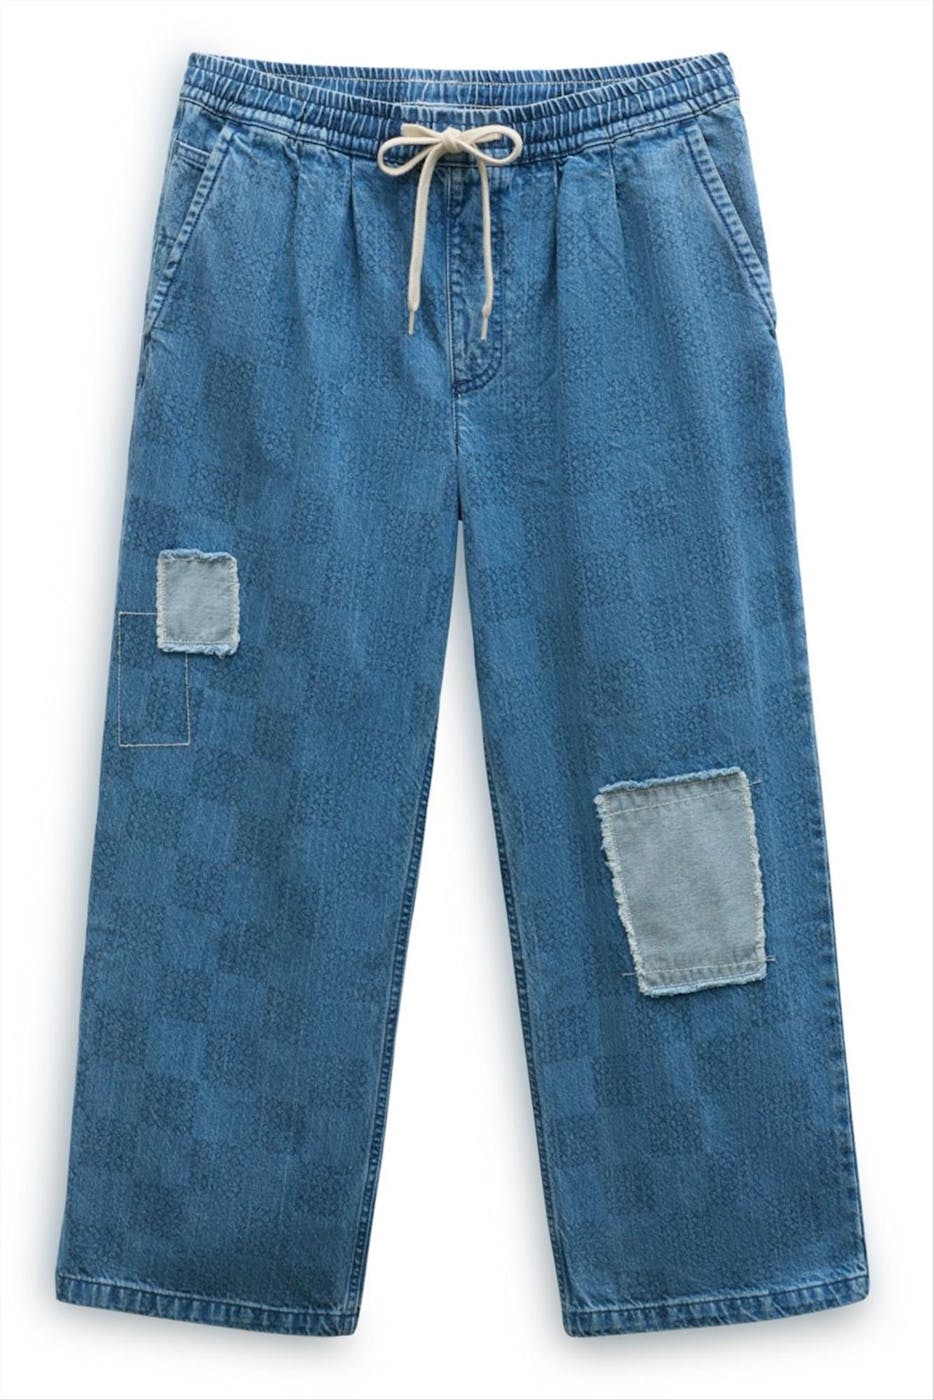 Vans  - Blauwe Mended Check jeans